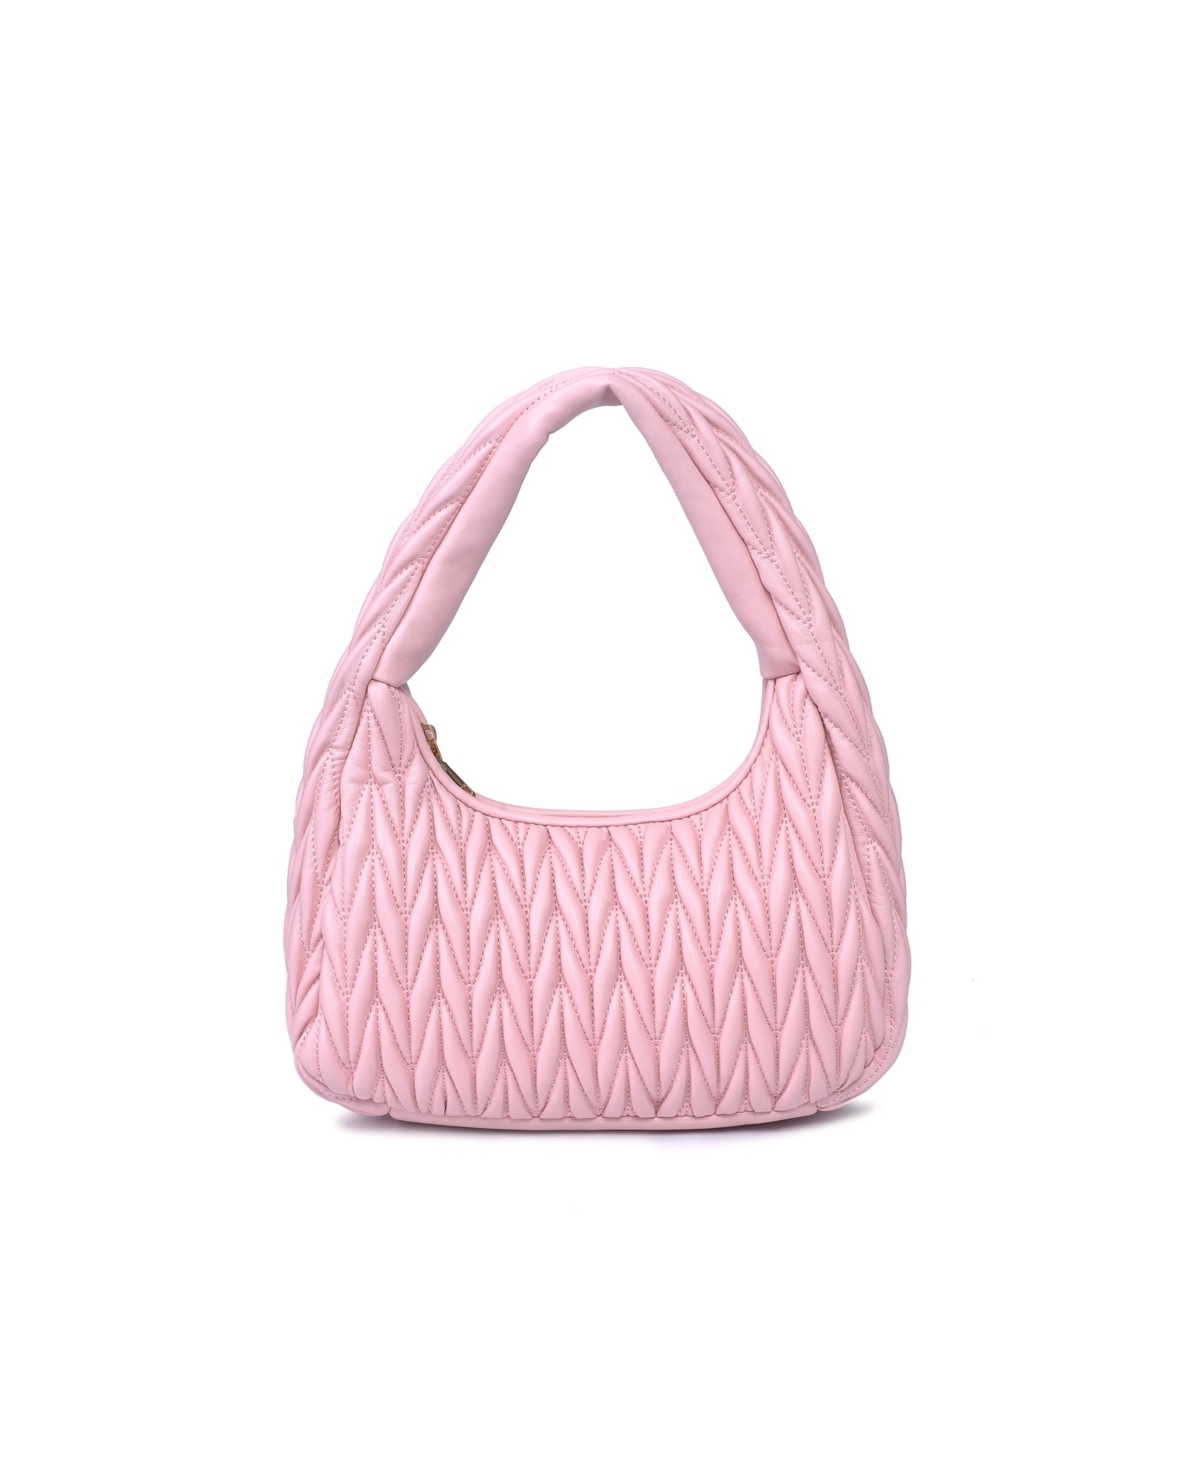 Urban Expressions Helen Quilted Shoulder Bag In Light Pink